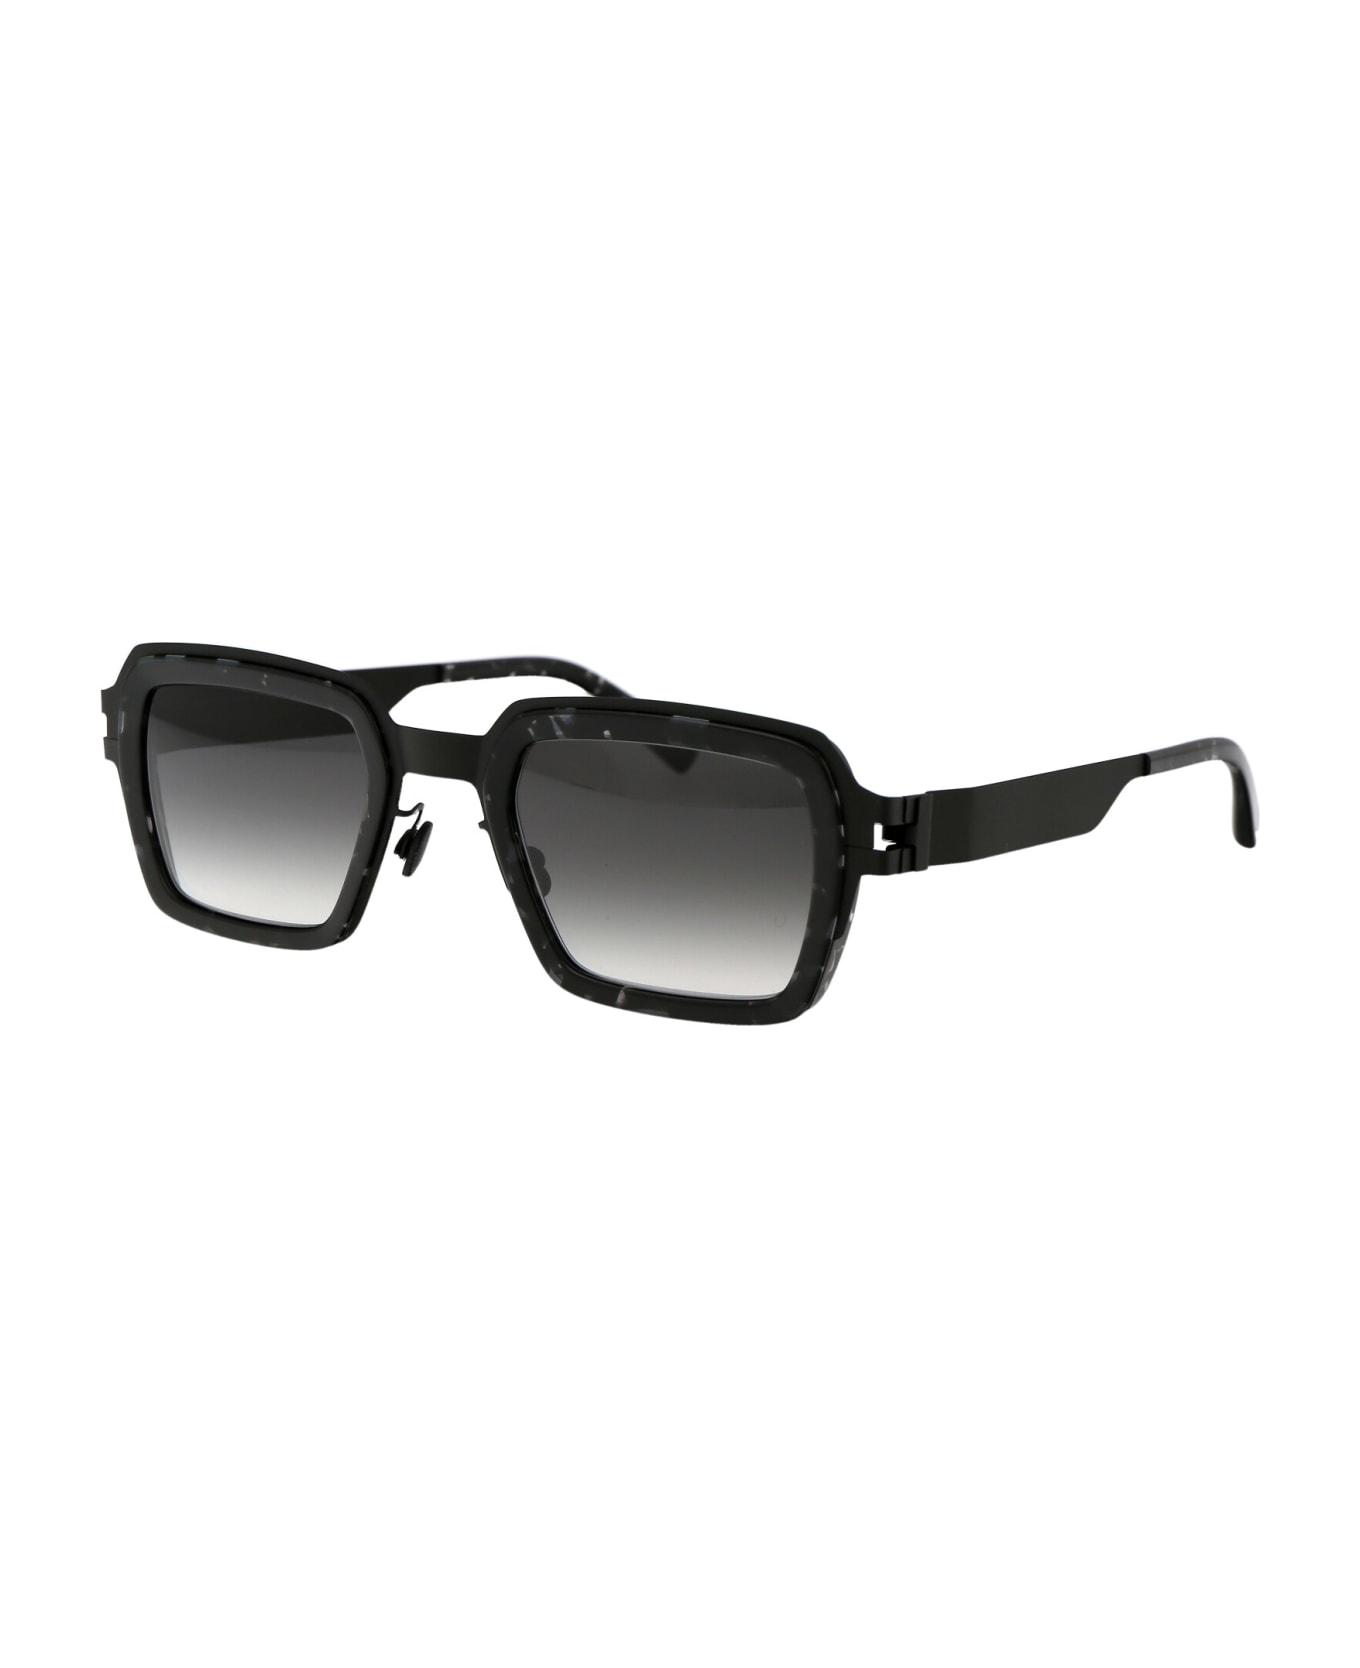 Mykita Lennon Sunglasses - 876 A50 Black/Black Havana Raw Black Gradient